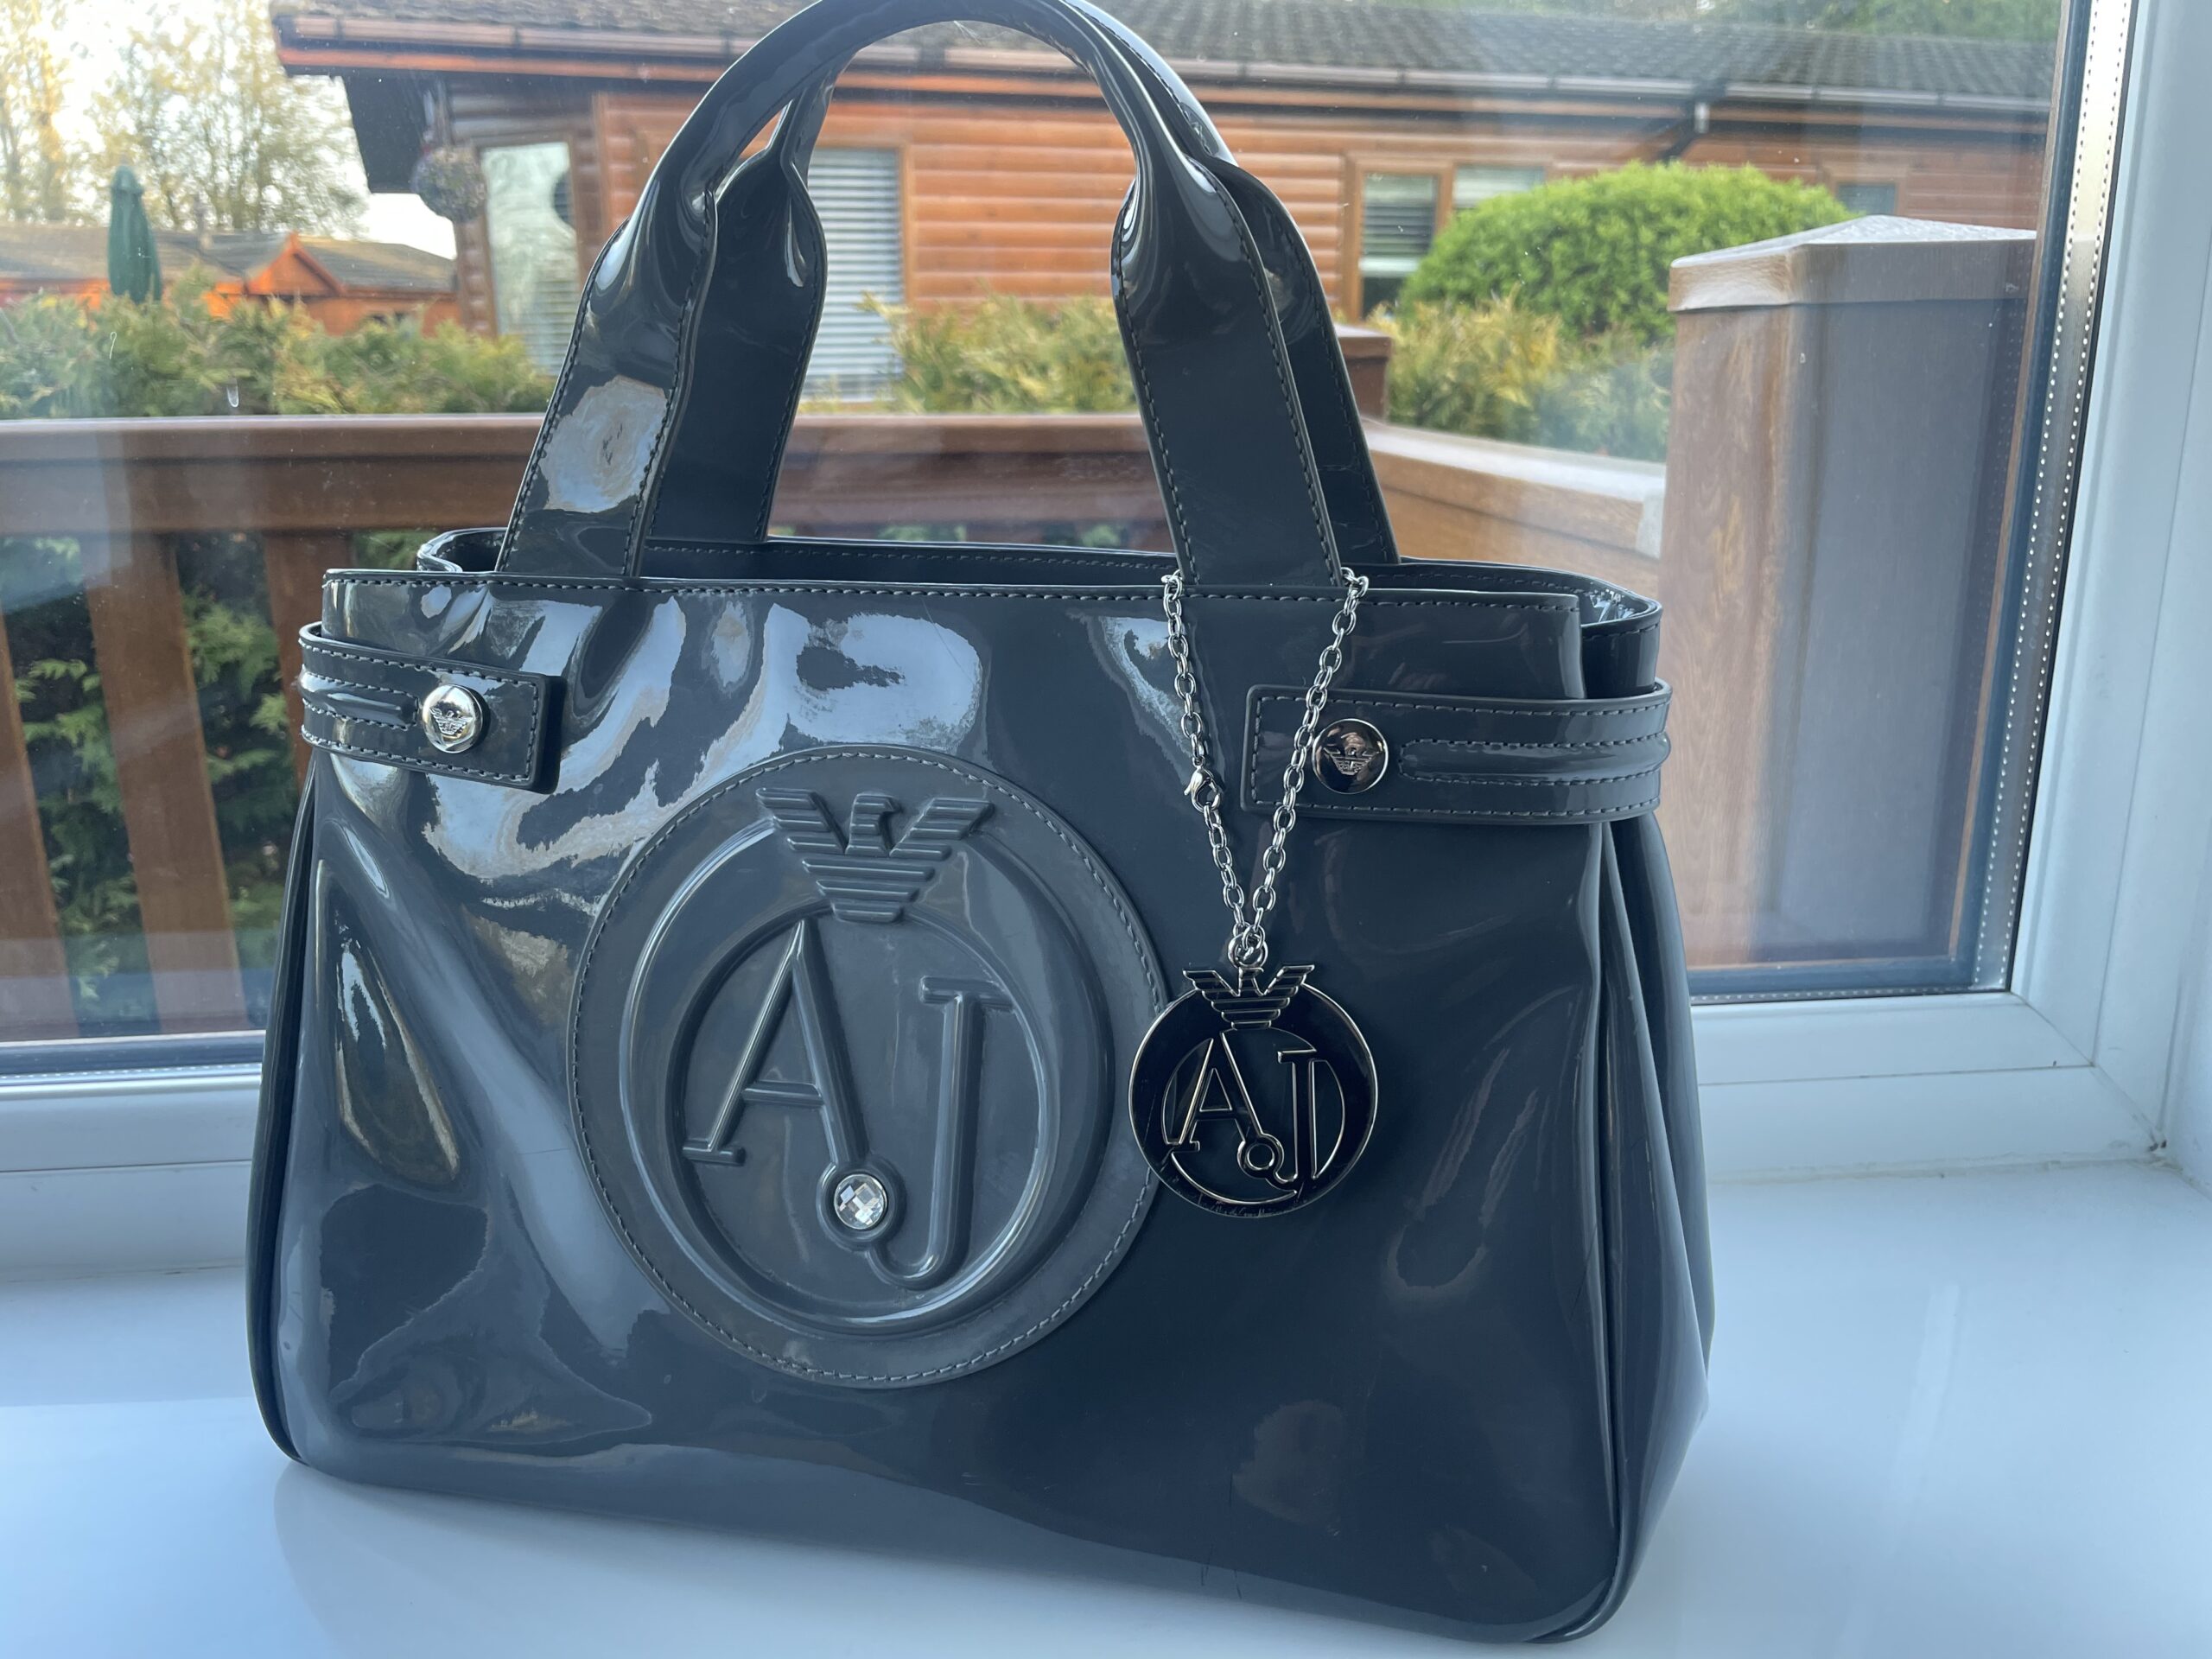 Armani Jeans Travel Tote Bags for Women | Mercari